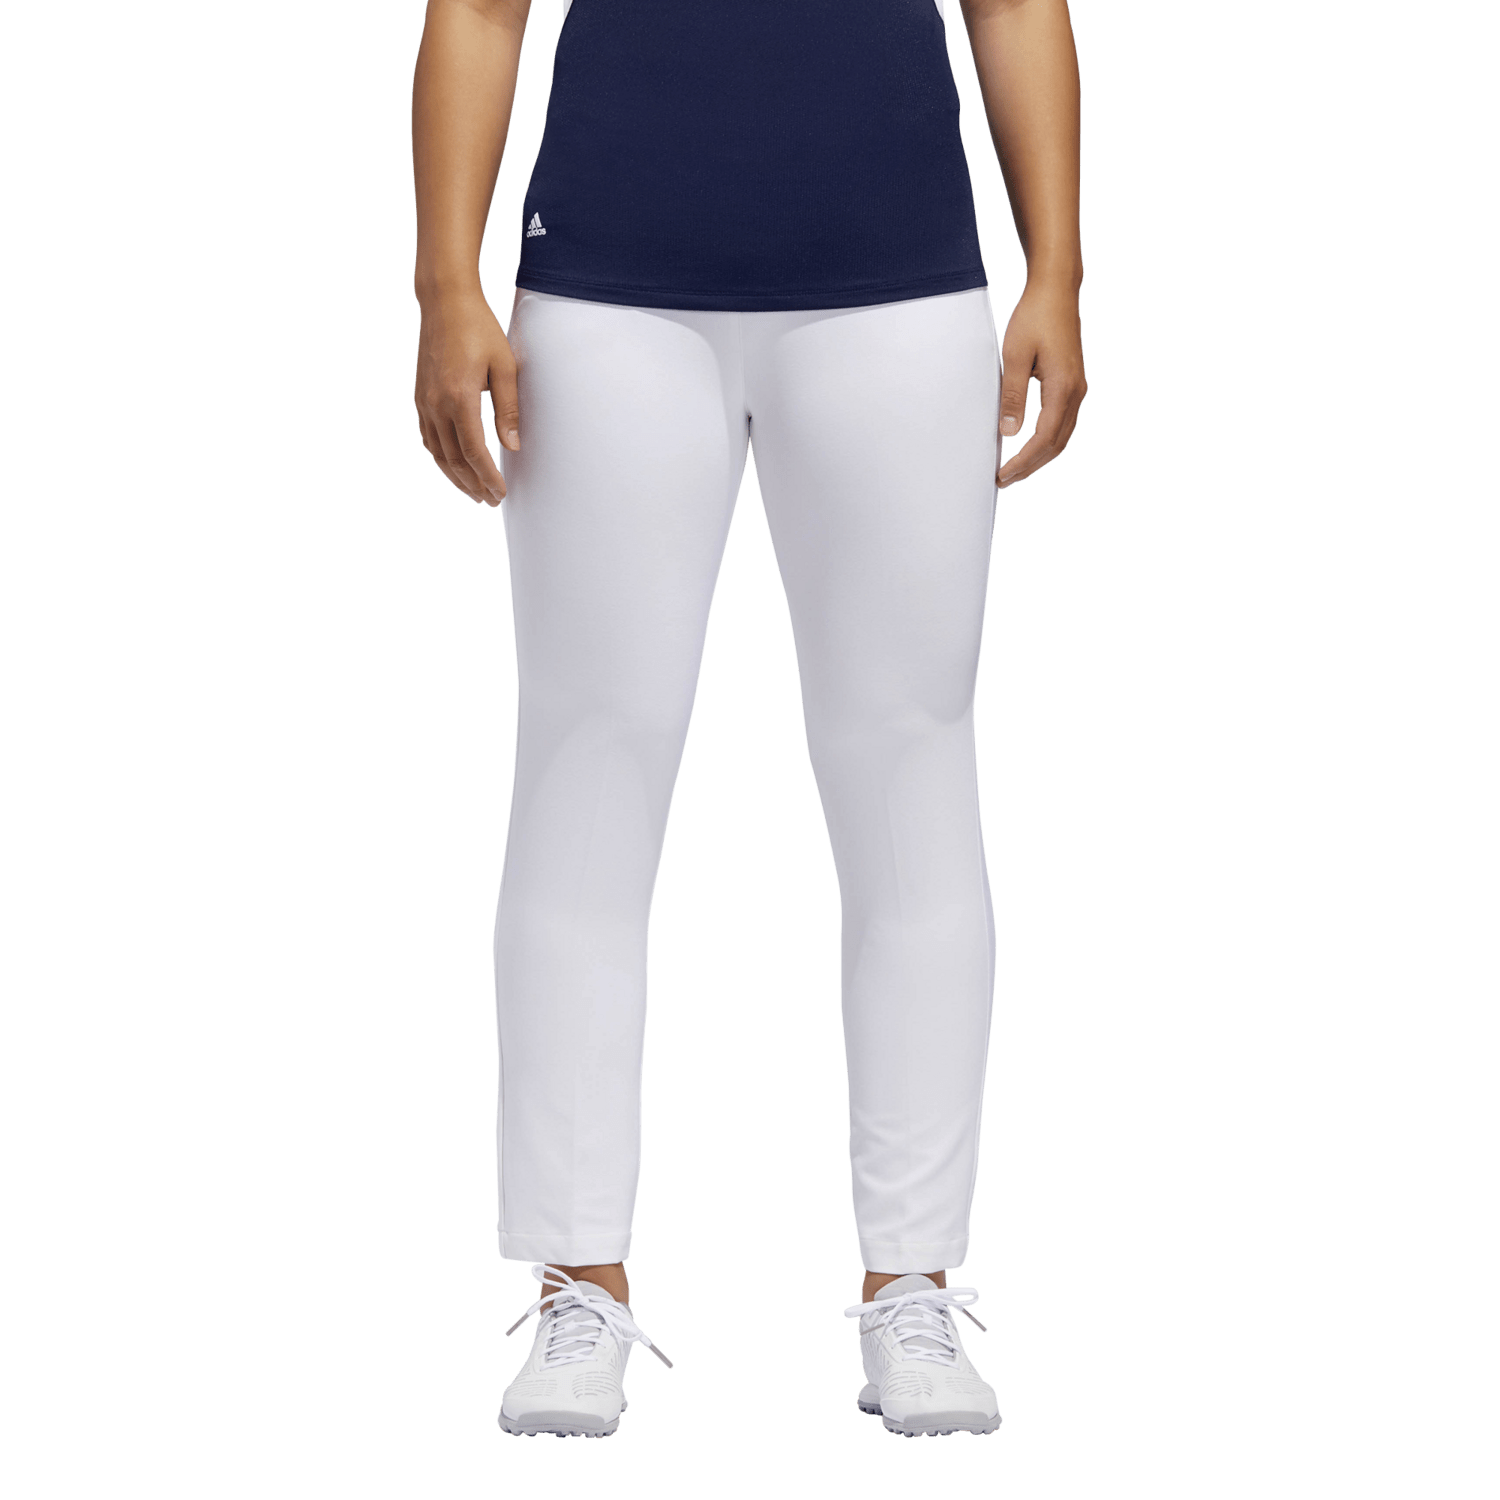 adidas women's ultimate365 adistar ankle golf pants